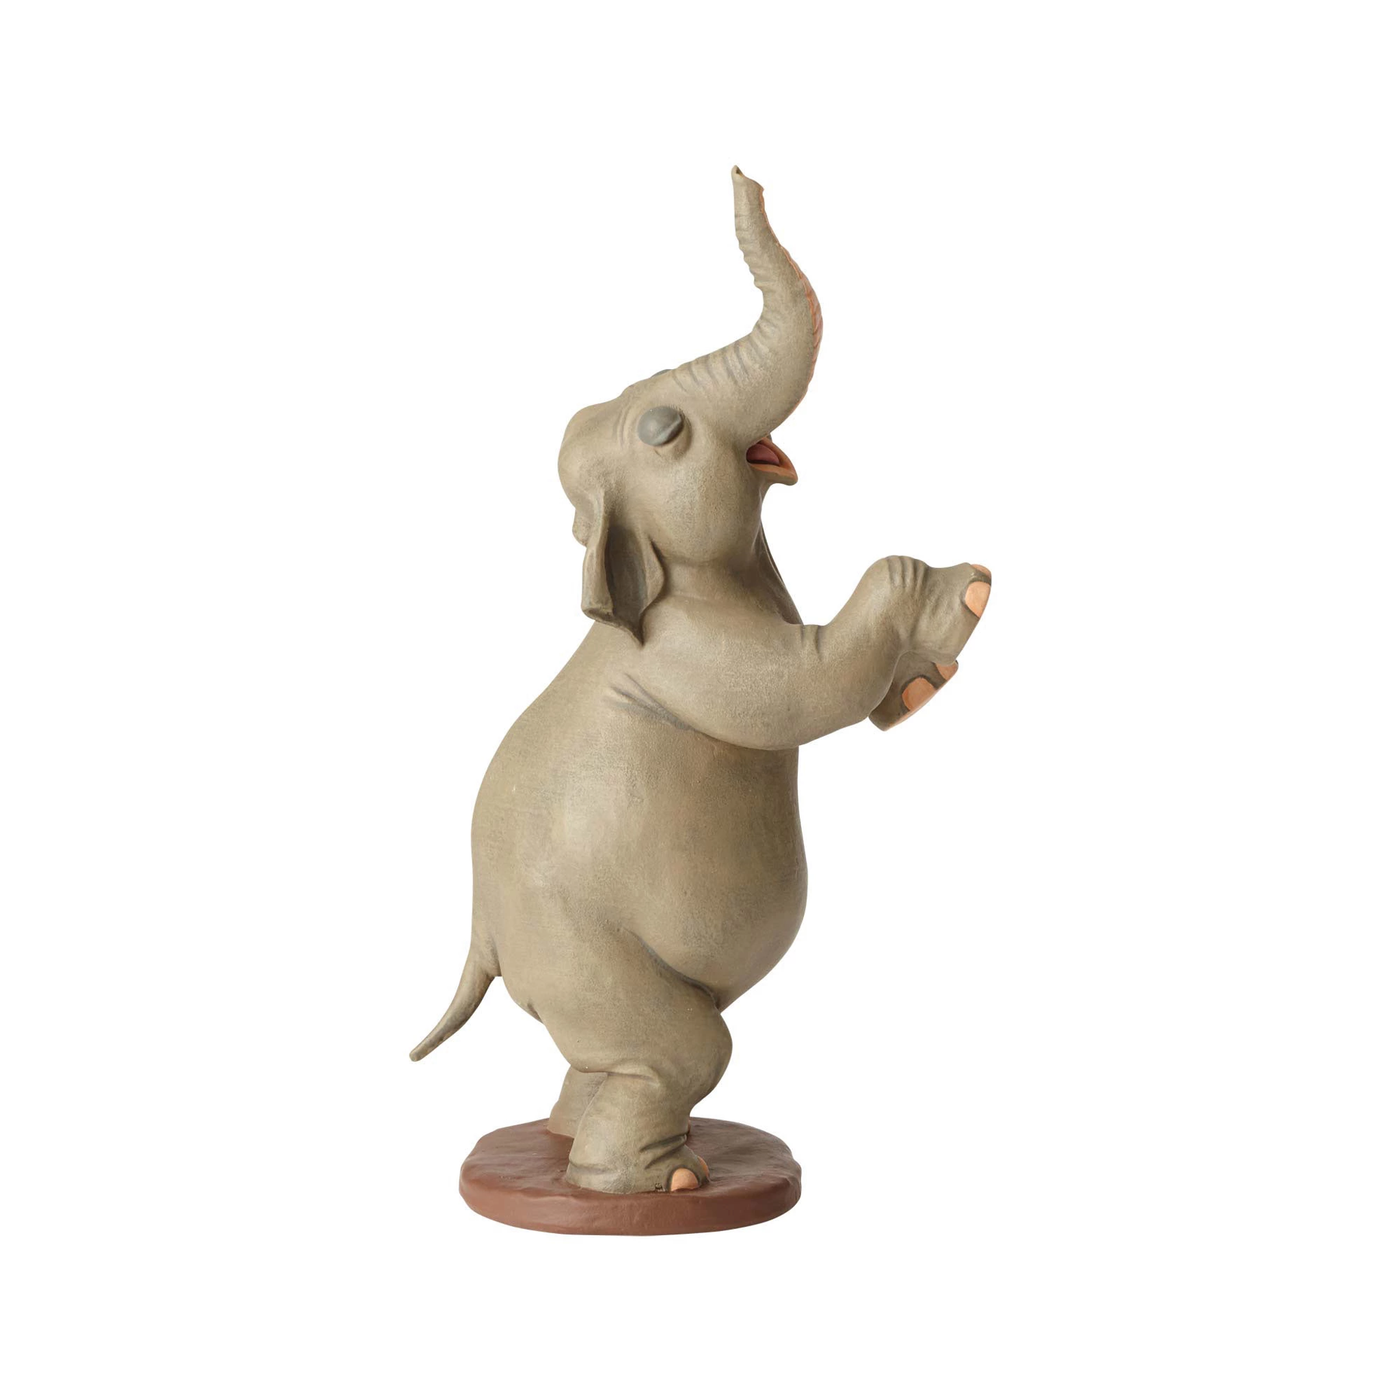 Fantasia Elephant Maquette Reproduction